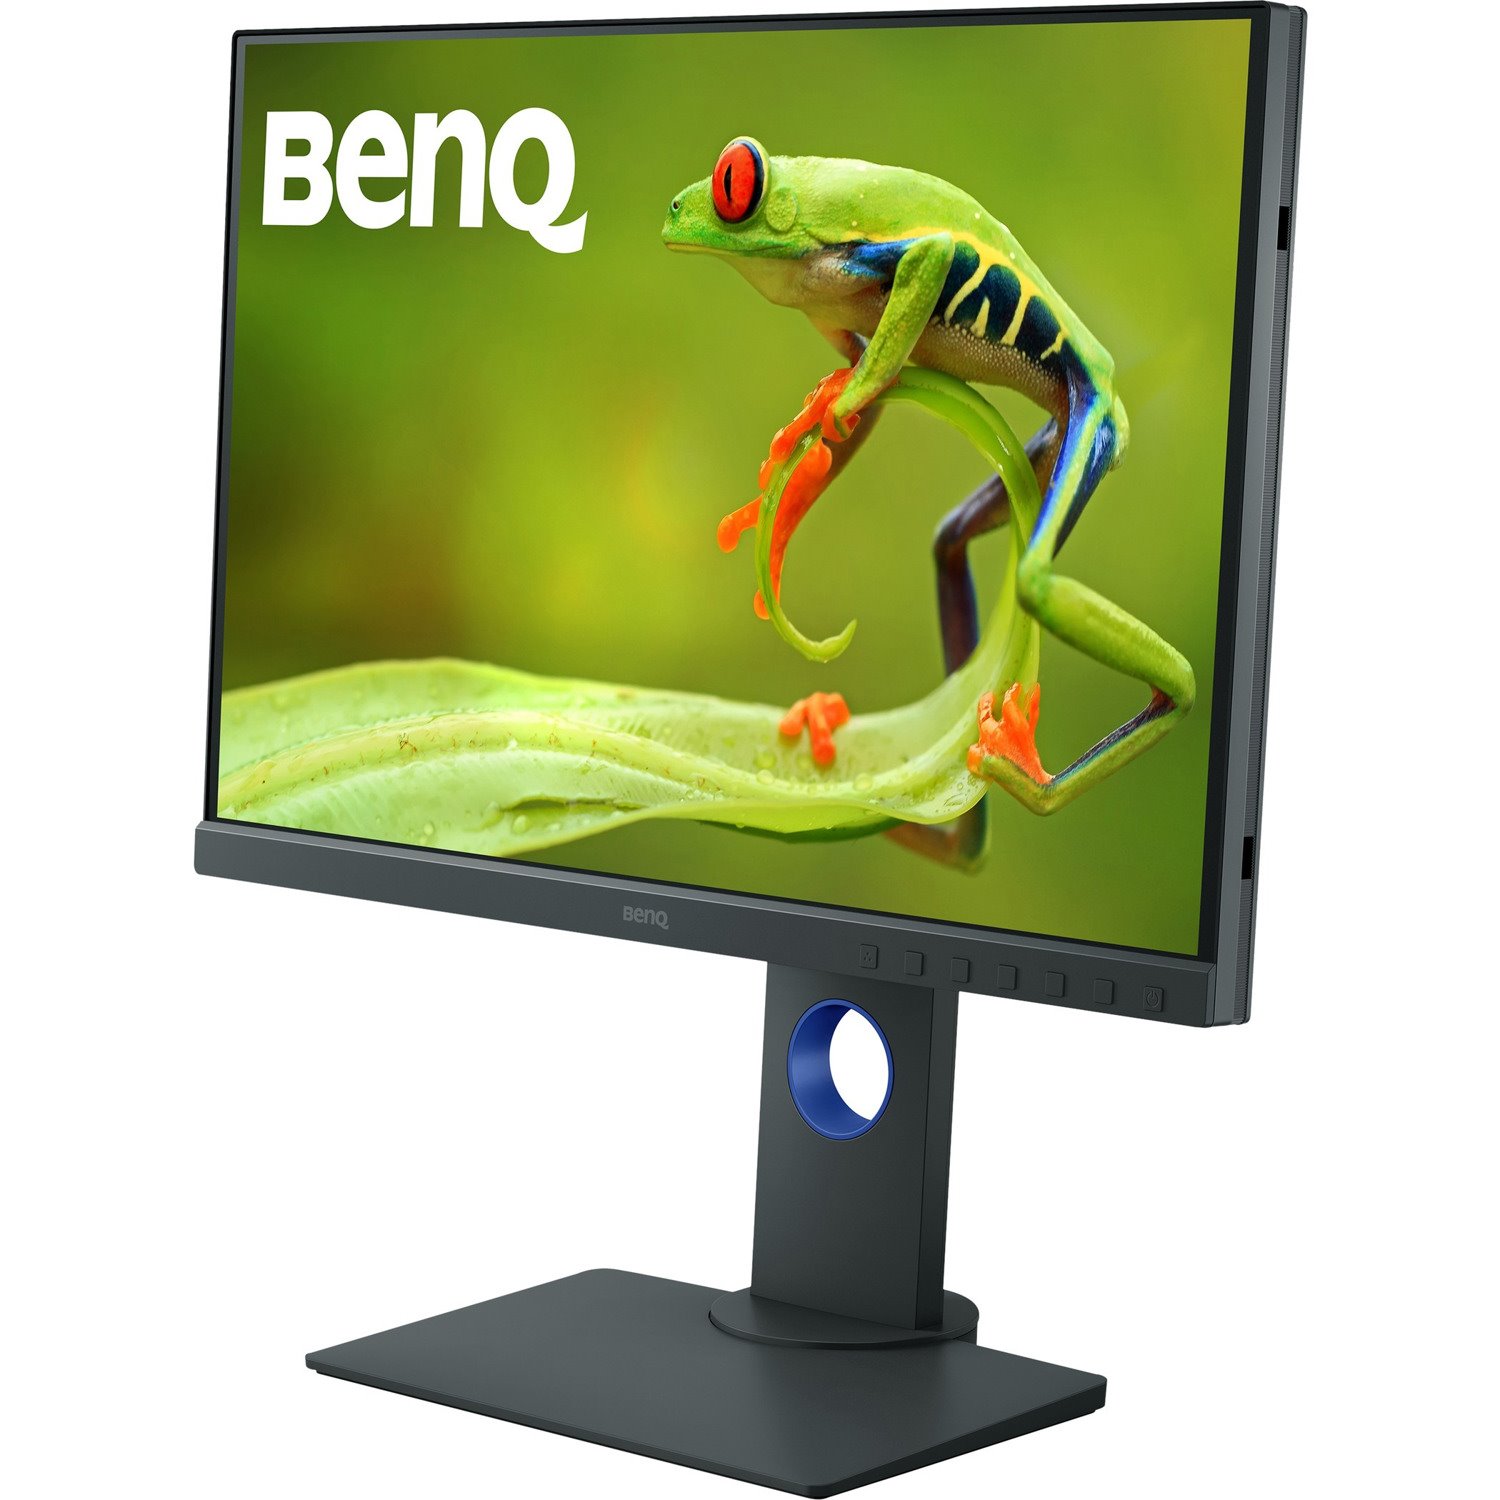 BenQ PhotoVue SW240 WUXGA LCD Monitor - 16:10 - Gray